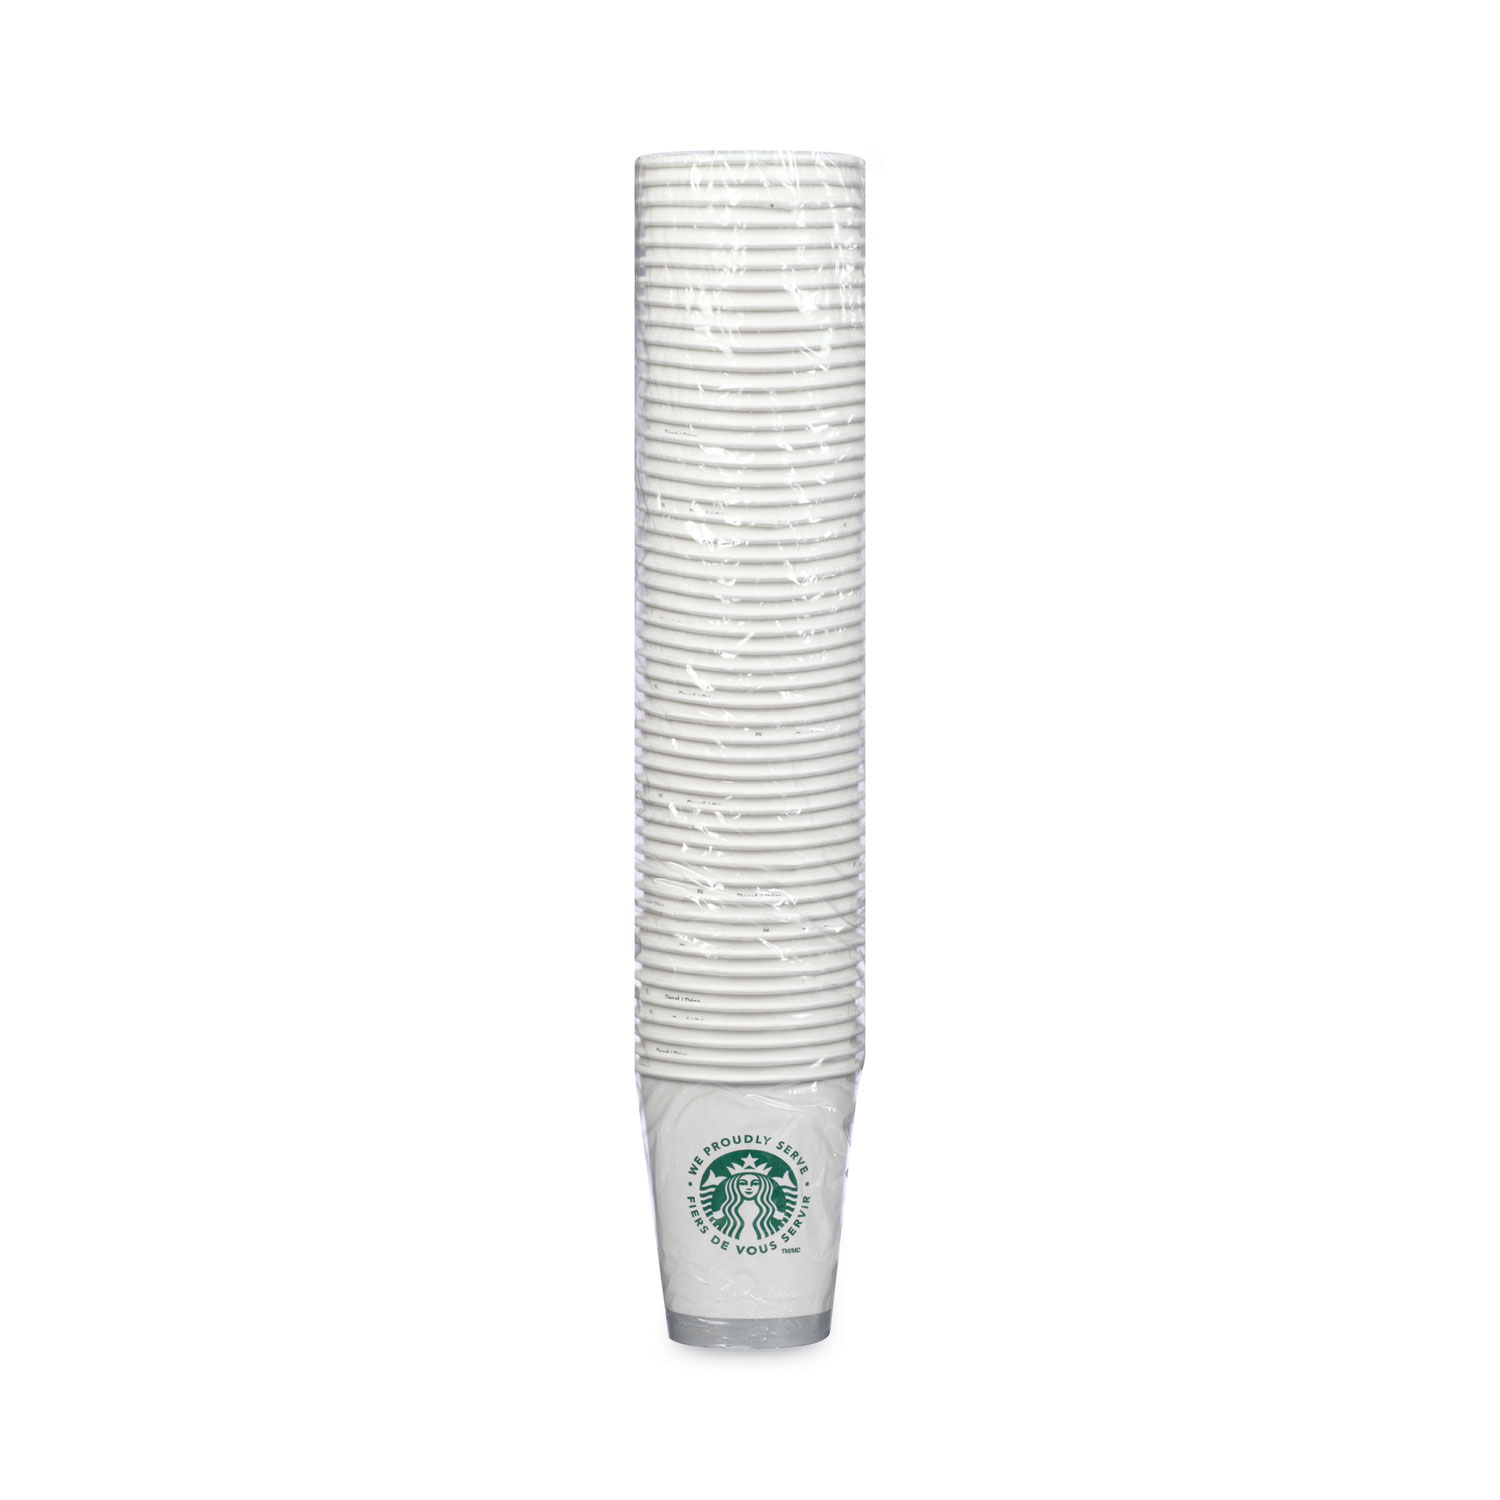 16 oz. Starbucks Logo Paper Hot Cups 1,000/Case